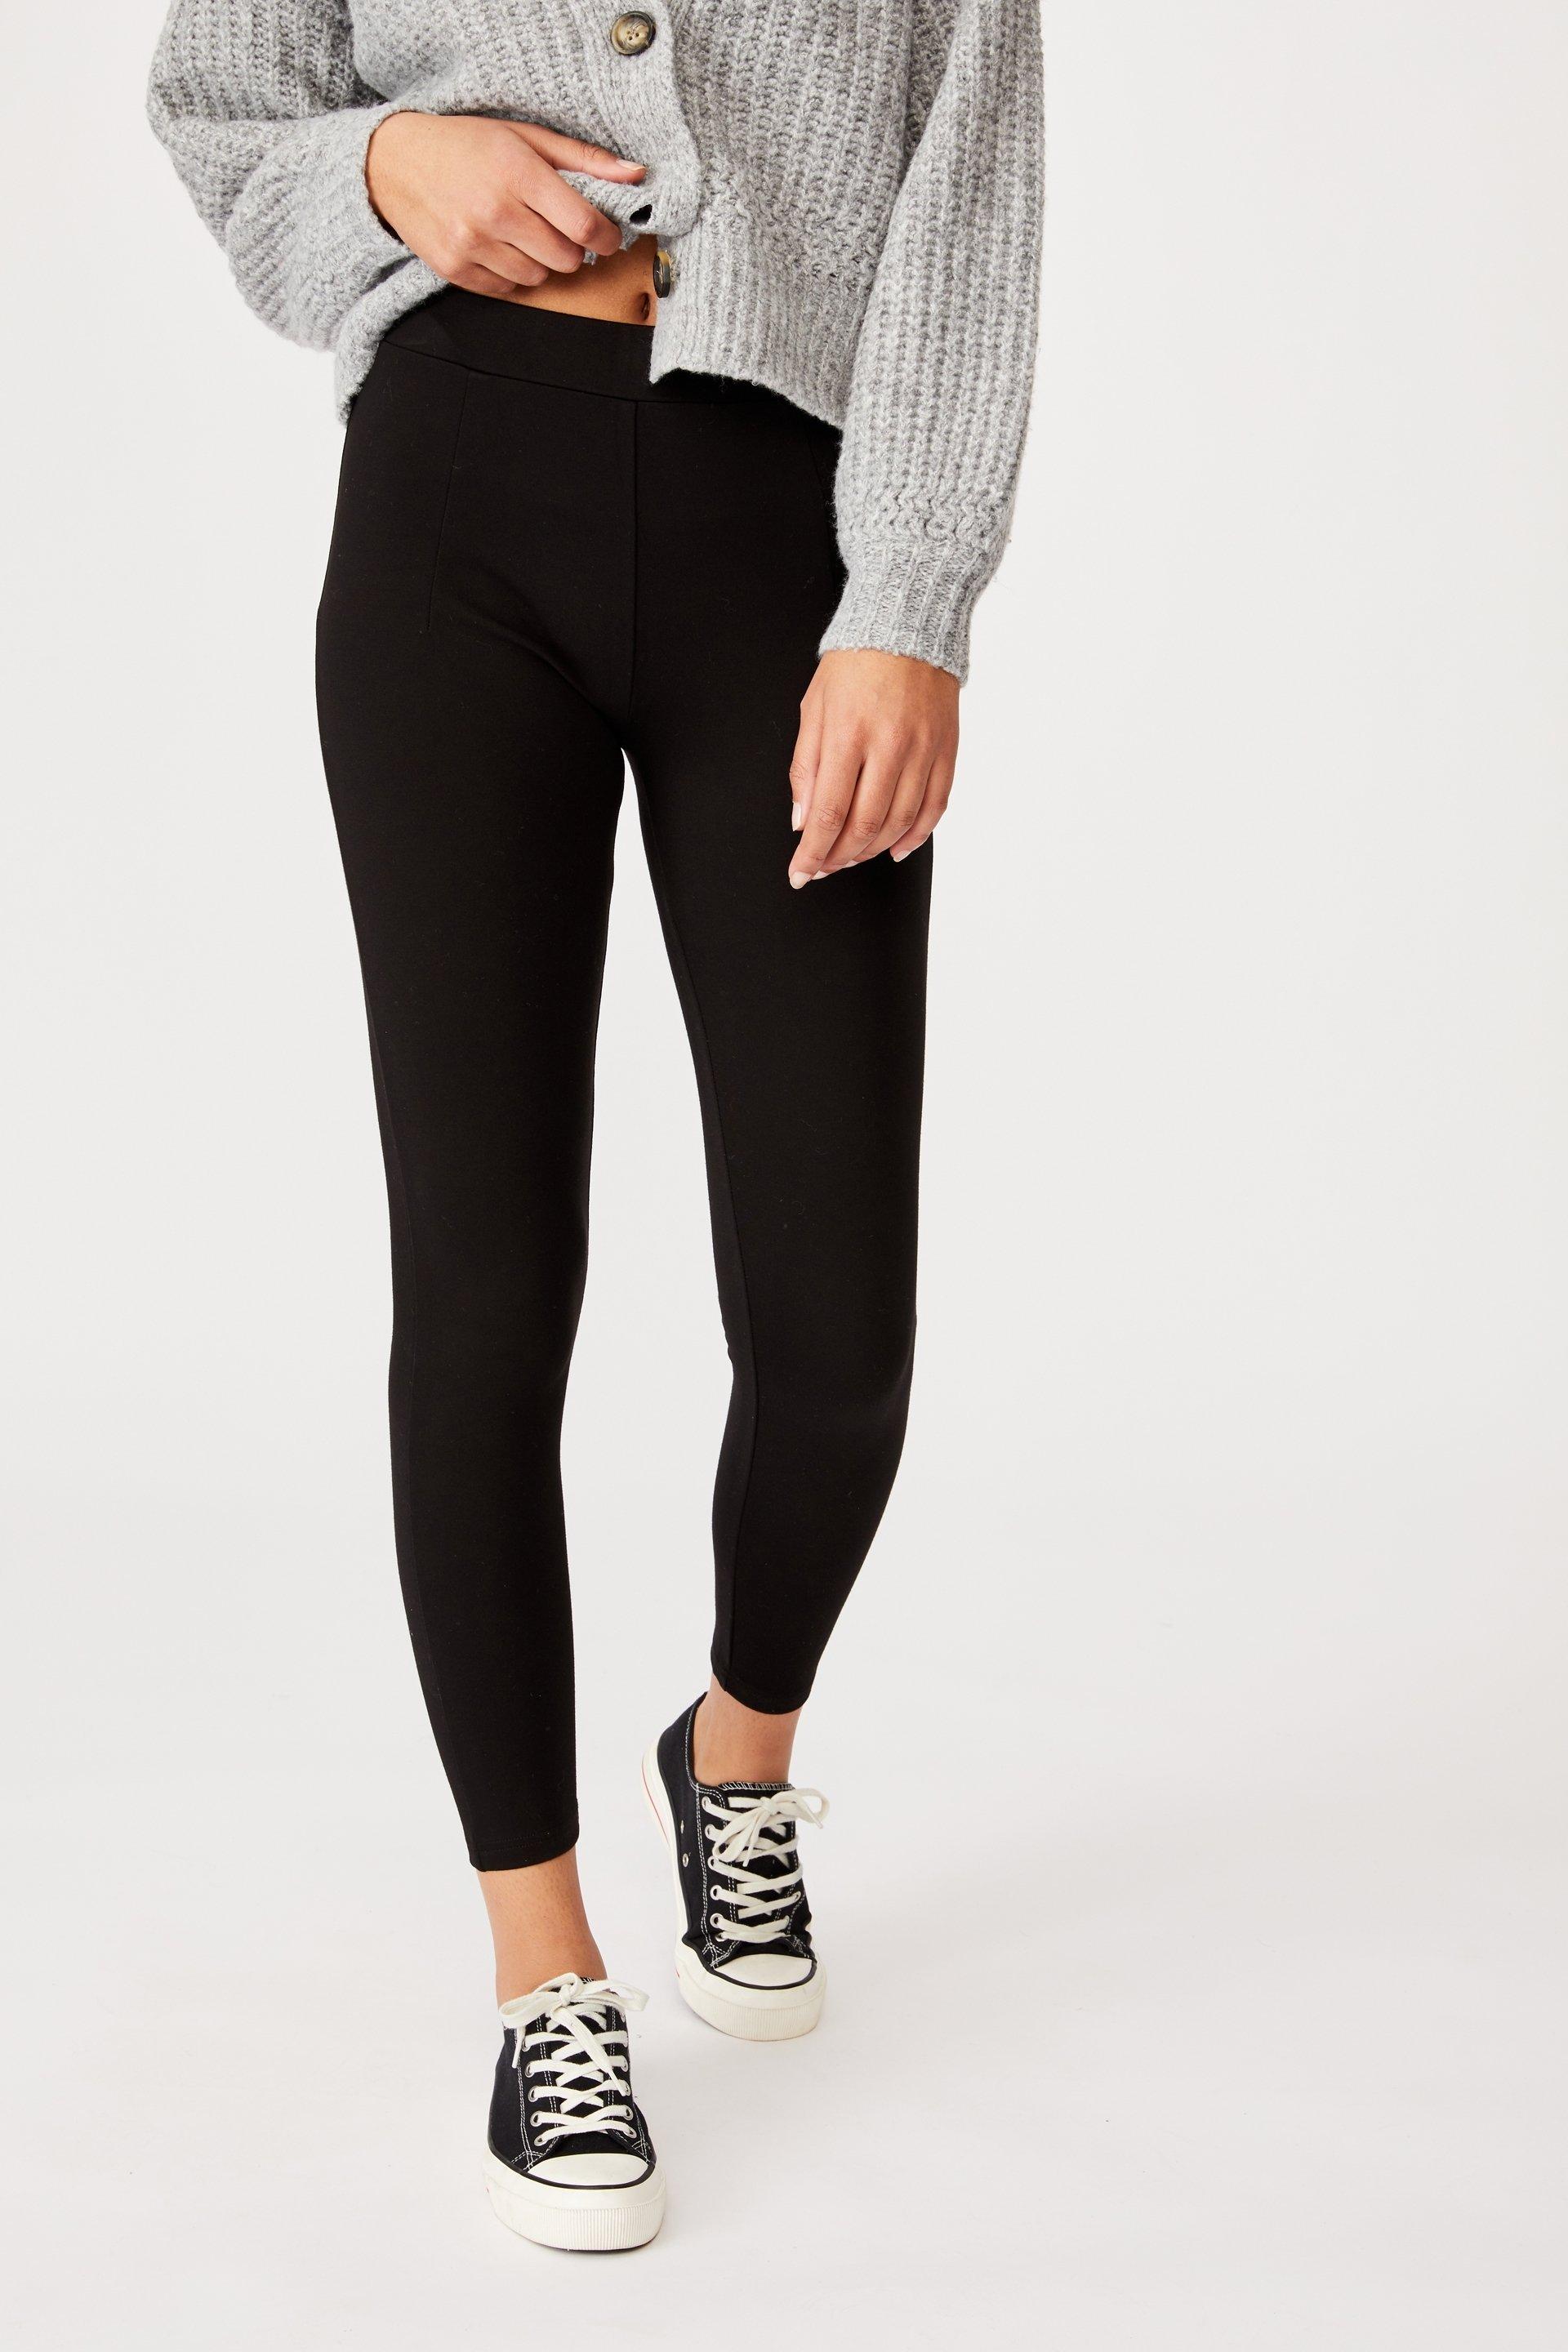 Ponti legging - black Cotton On Trousers | Superbalist.com